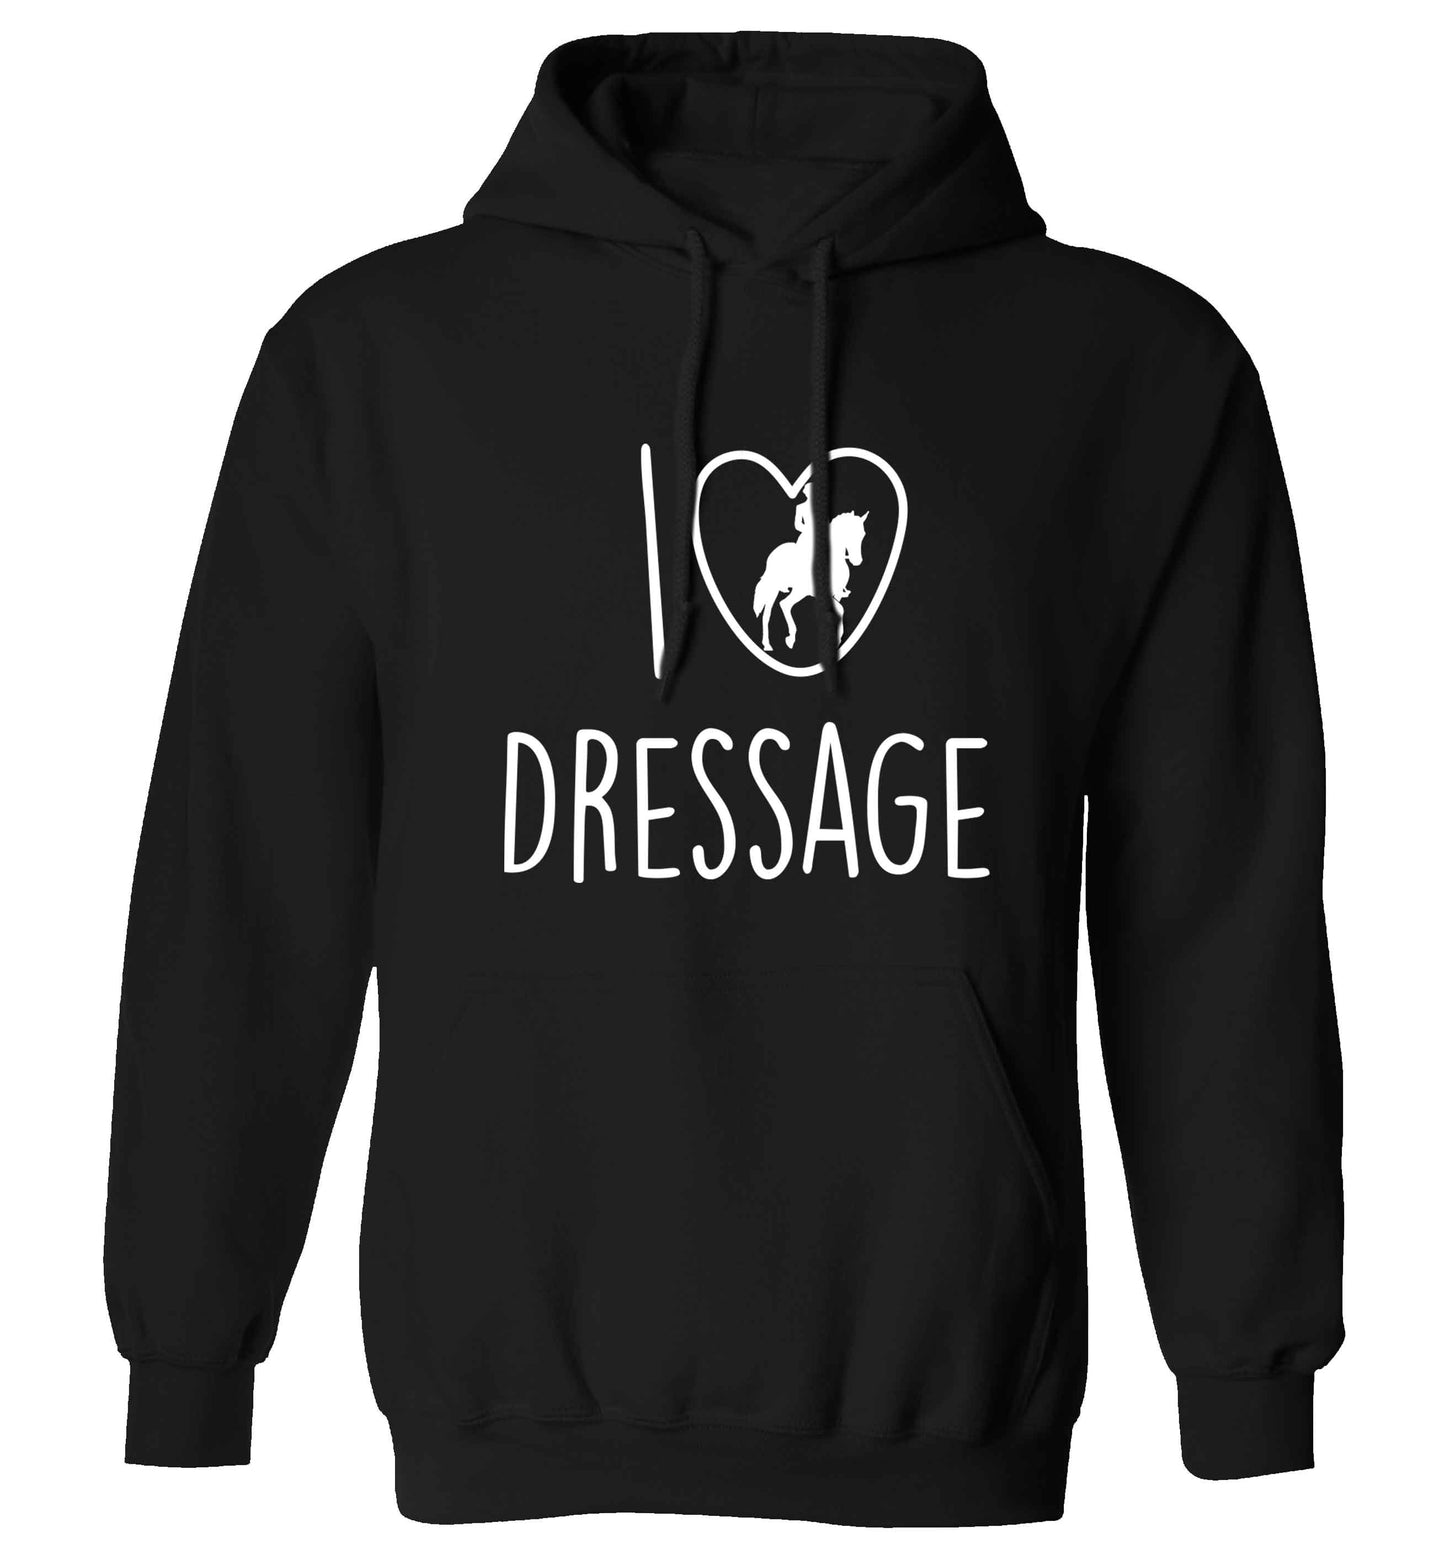 I love dressage adults unisex black hoodie 2XL